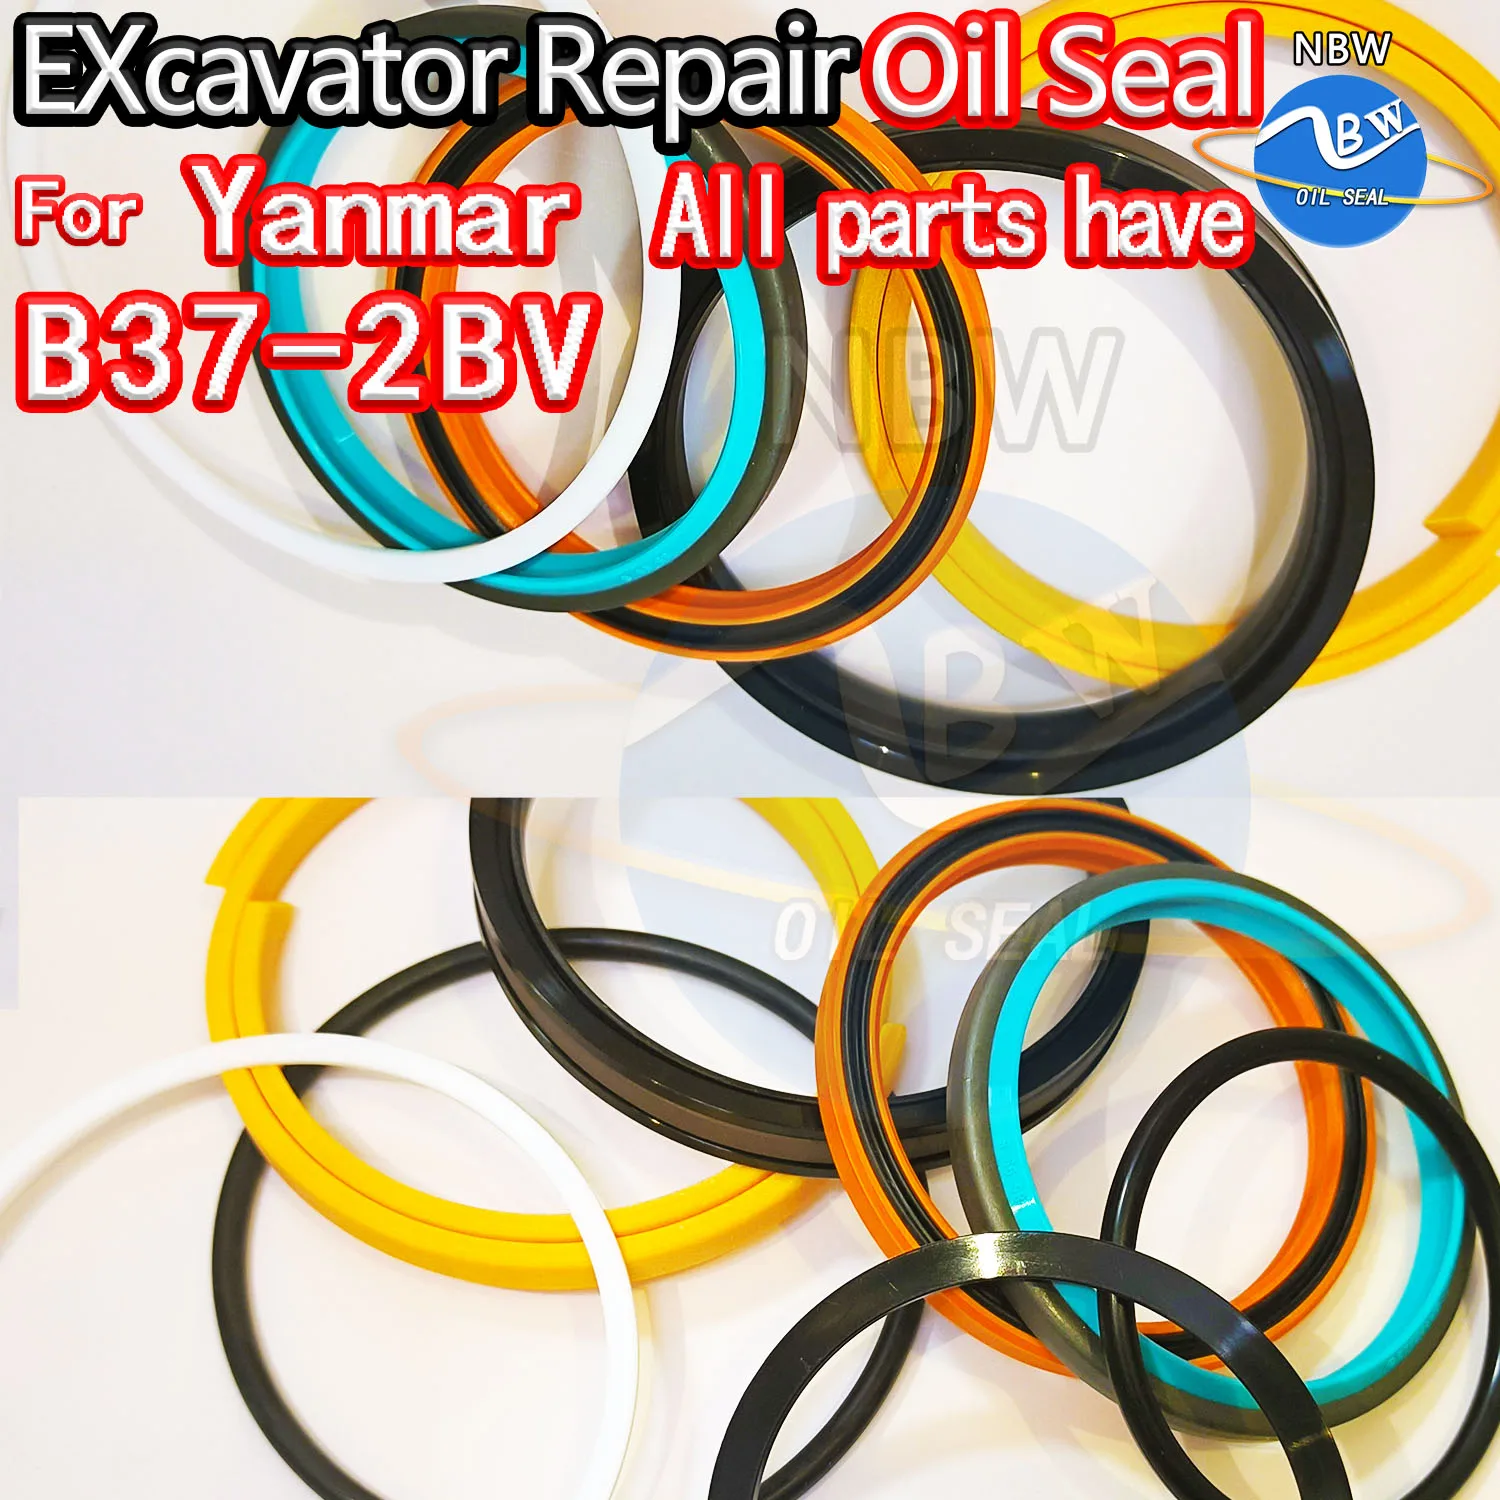 

For Yanmar B37-2BV Excavator Oil Seal Kit High Quality Repair Ya B37 2BV Gasket Nitrile NBR Nok Washer Skf Service Track Spovel